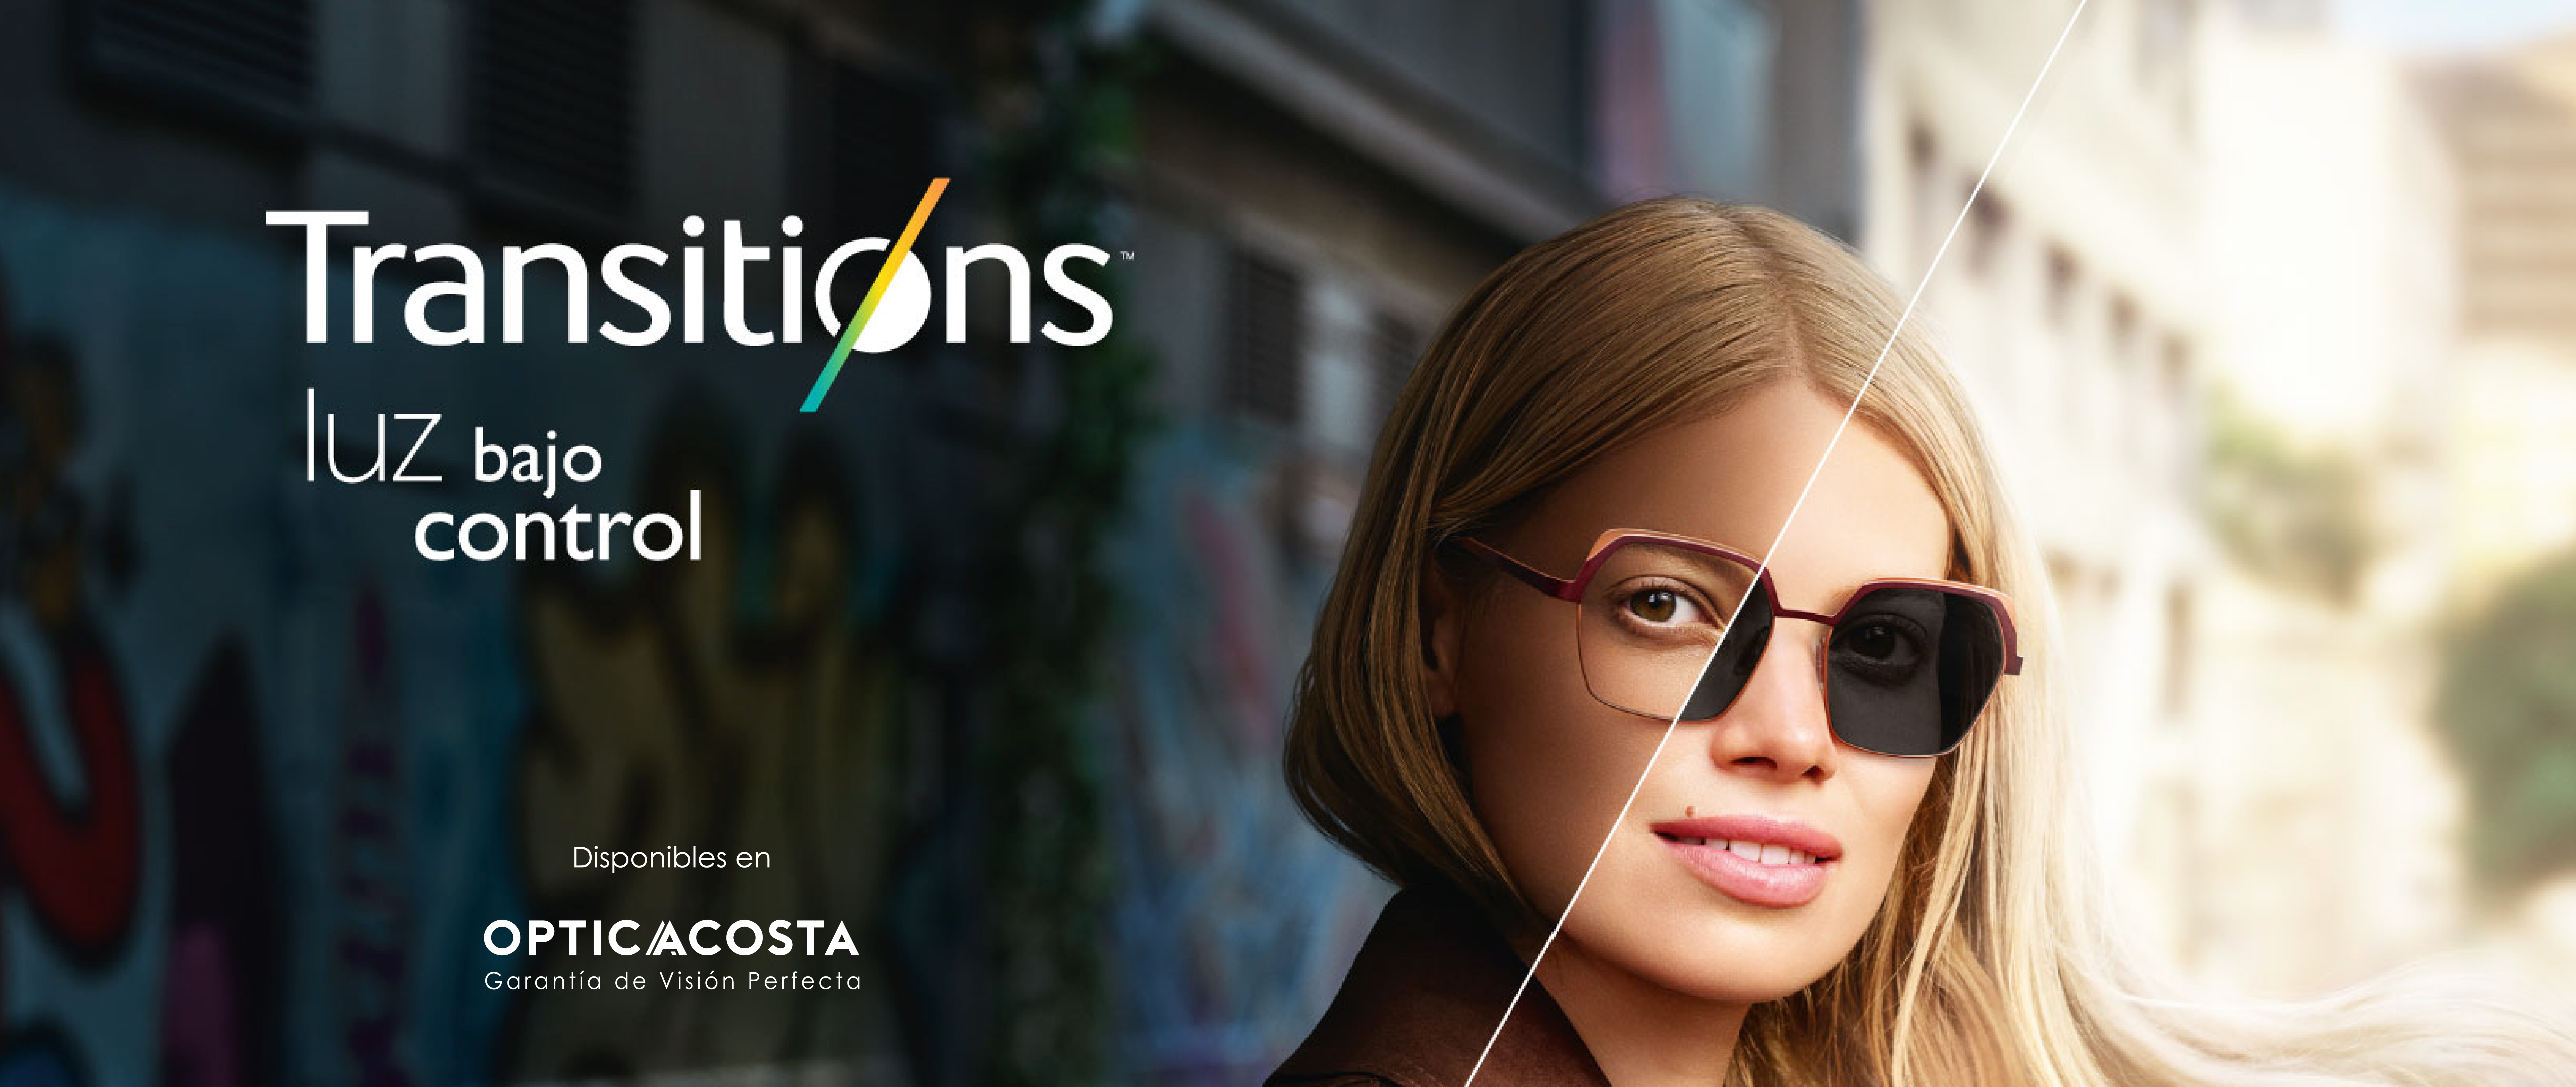 Banner de lentes transitions de la Optica Acosta, garantía de visión perfecta.